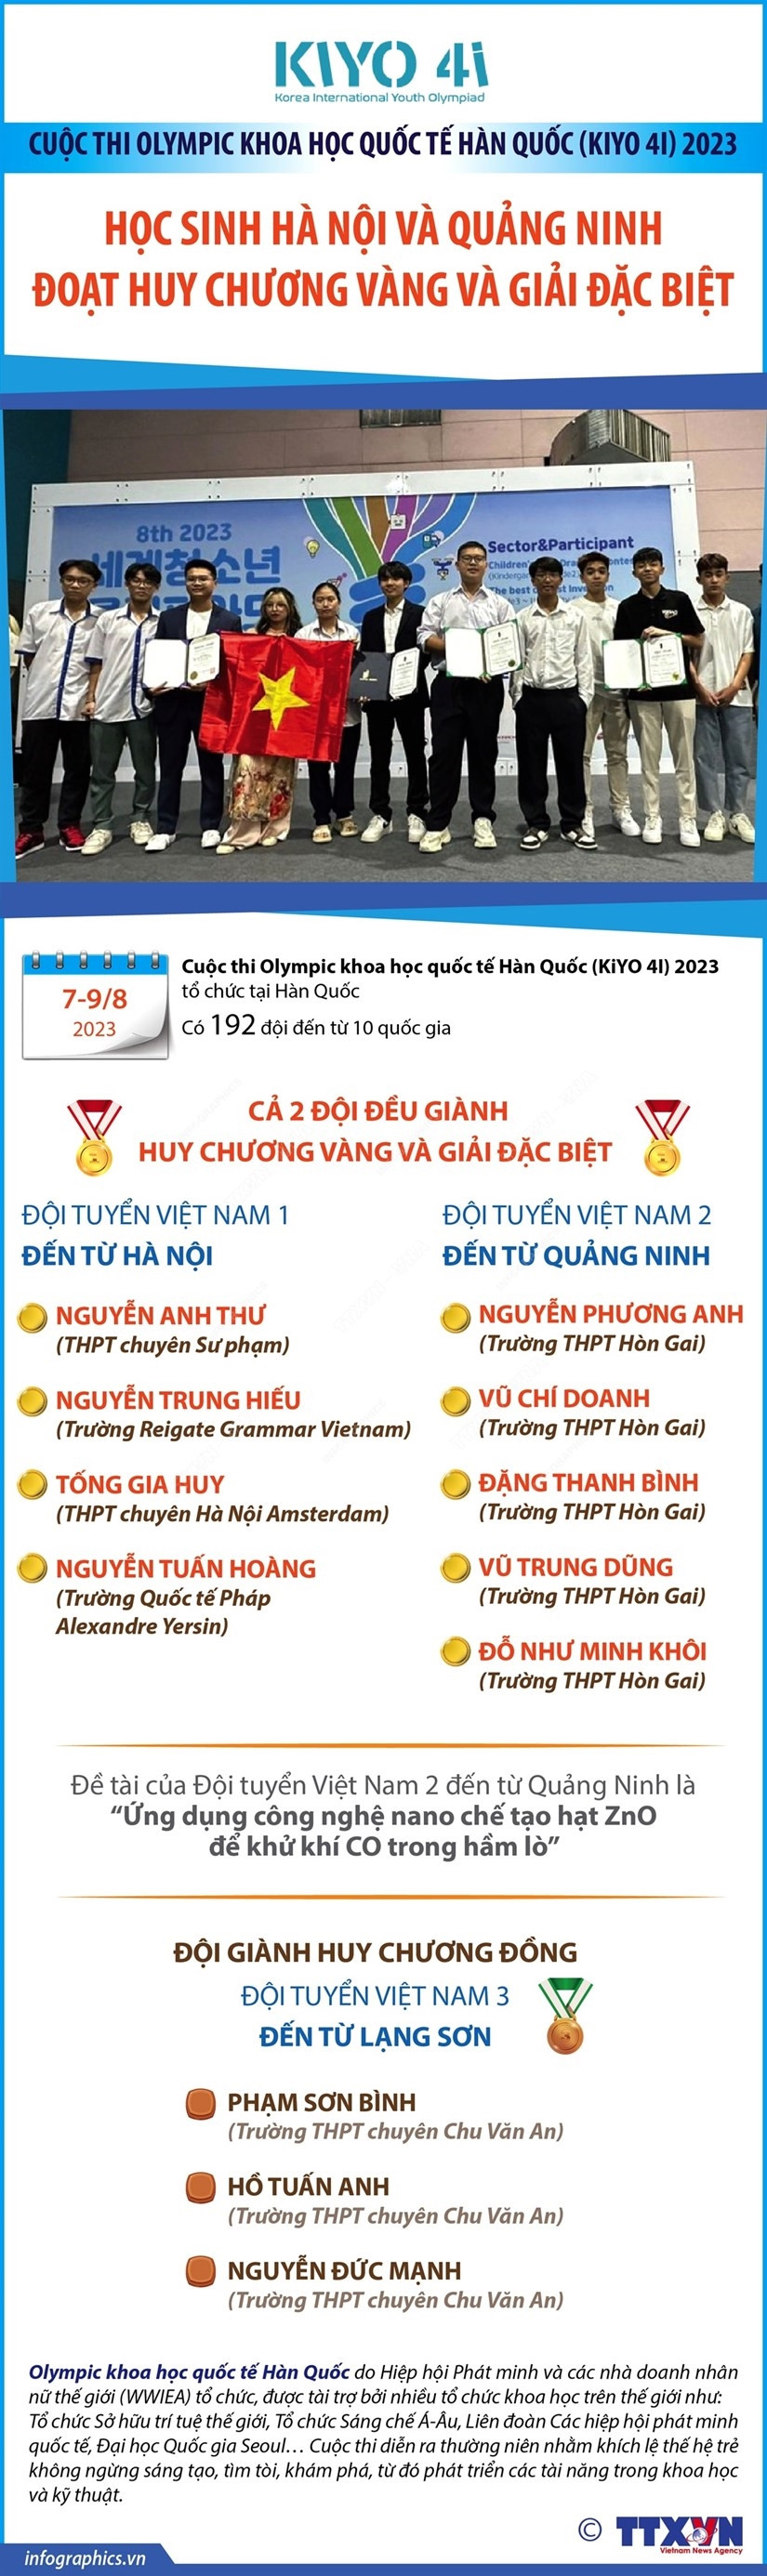 Hoc sinh Viet Nam the hien xuat sac tai Olympic Khoa hoc Han Quoc hinh anh 1